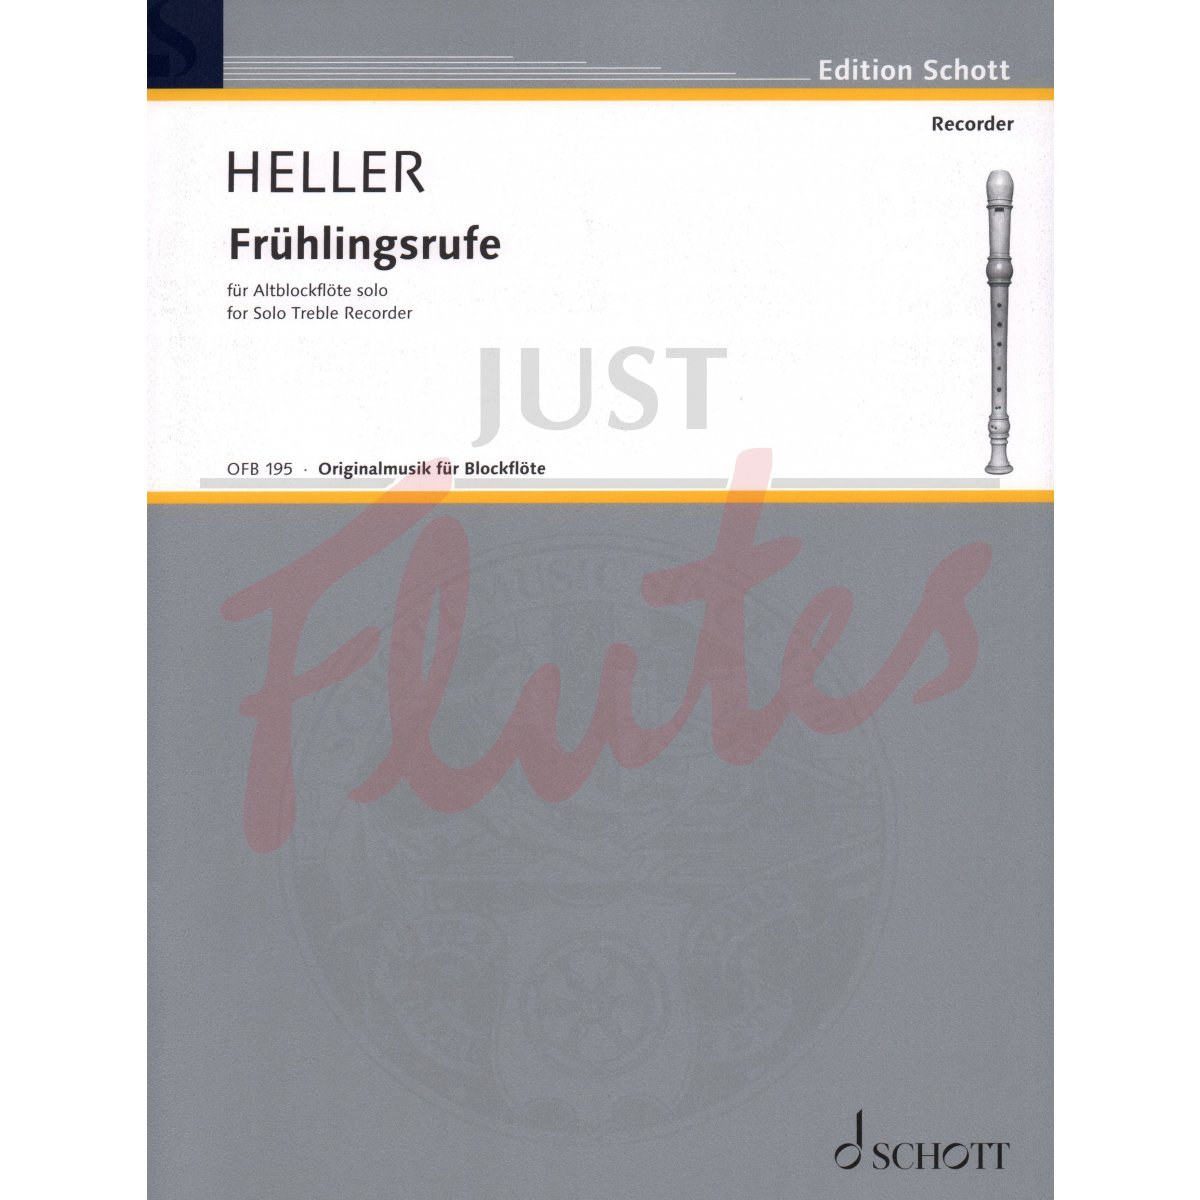 Frühlingsrufe (Call of Spring) for Solo Treble Recorder/Flute